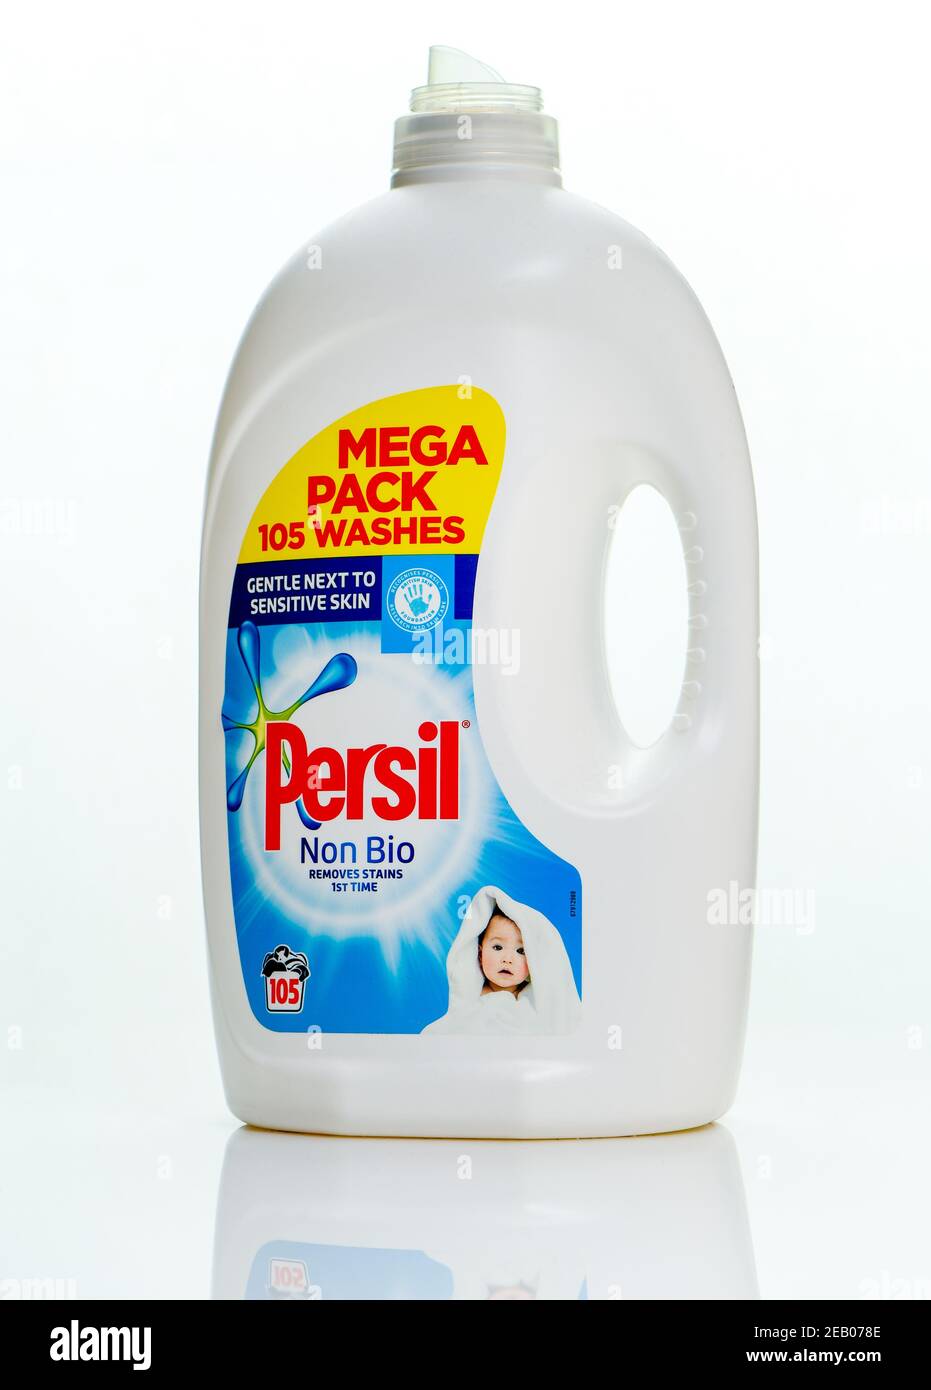 Persil non bio mega pack clothes household chores washing up liquid large  bottle on white background with reflection Stock Photo - Alamy